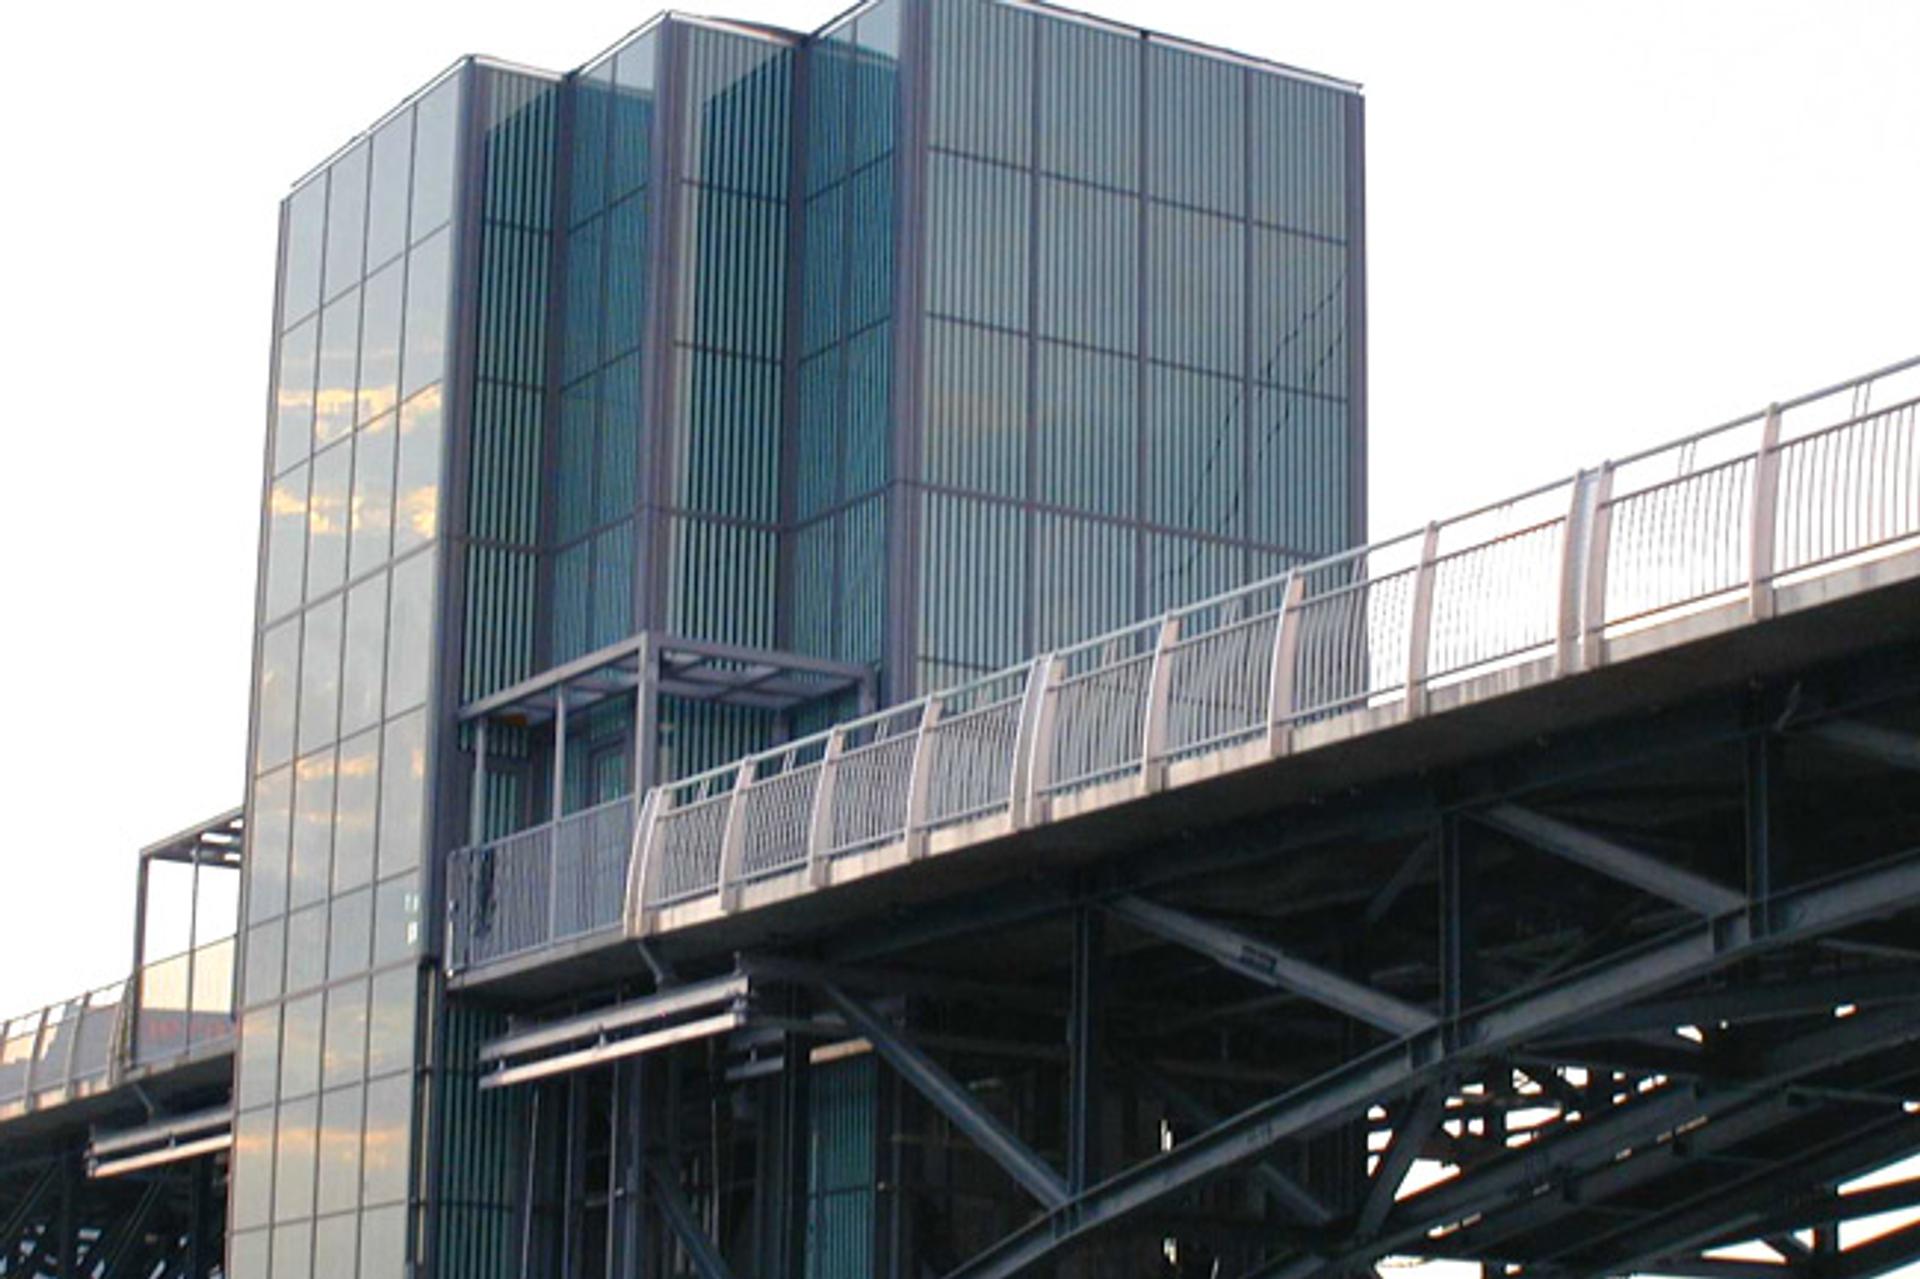 Custom railing system • Corrosion-resistant stainless steel to endure the harsh Niagara Falls environment • Niagara Falls, New York